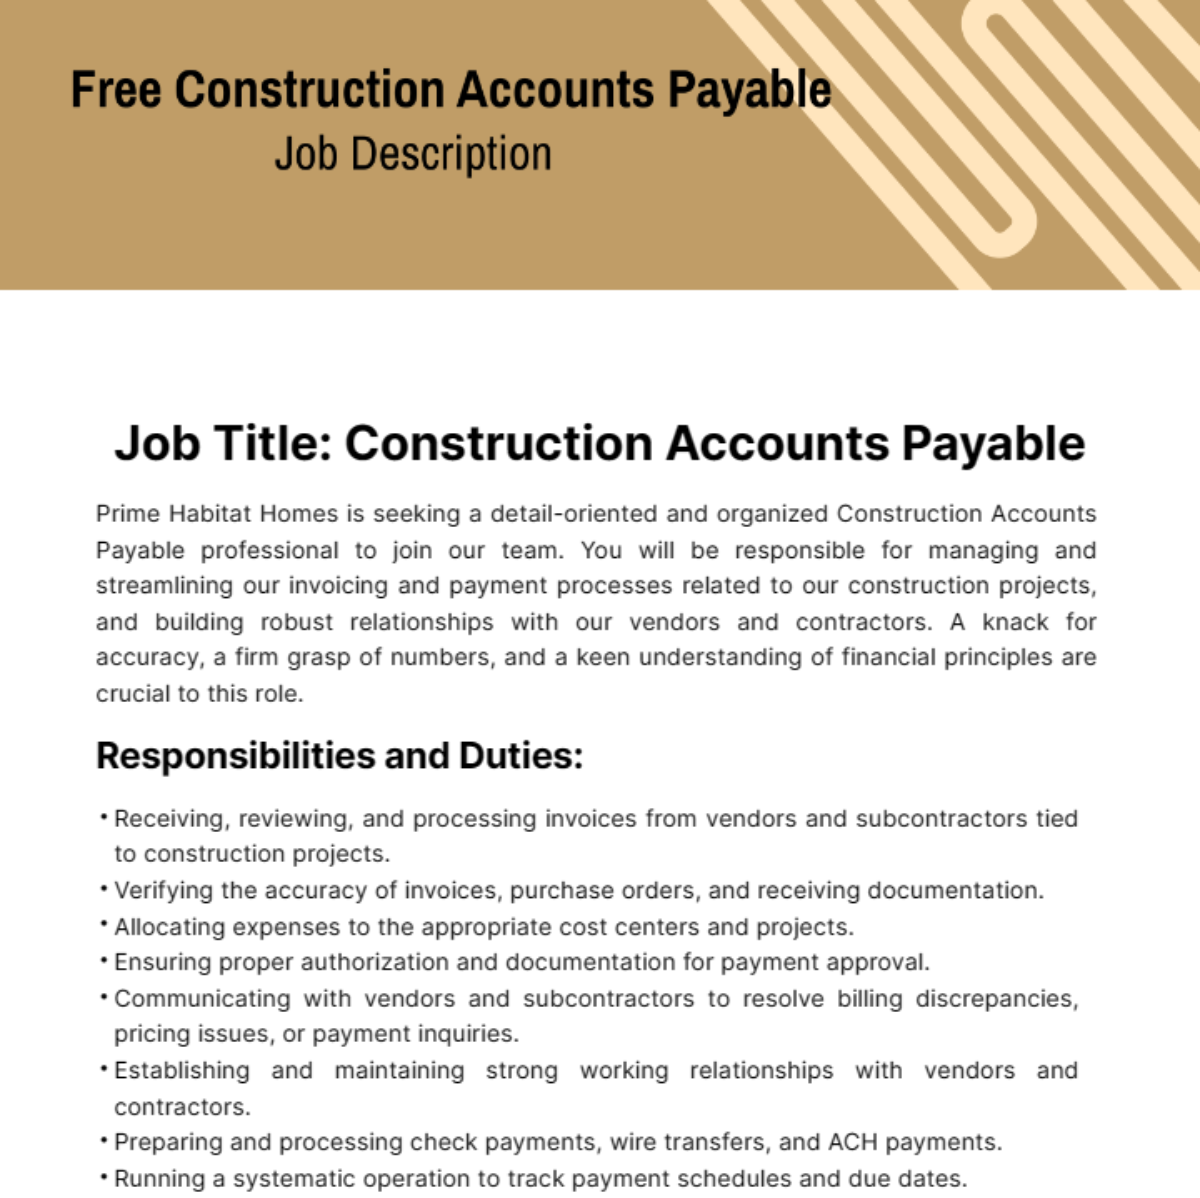 Free Construction Accounts Payable Job Description Template